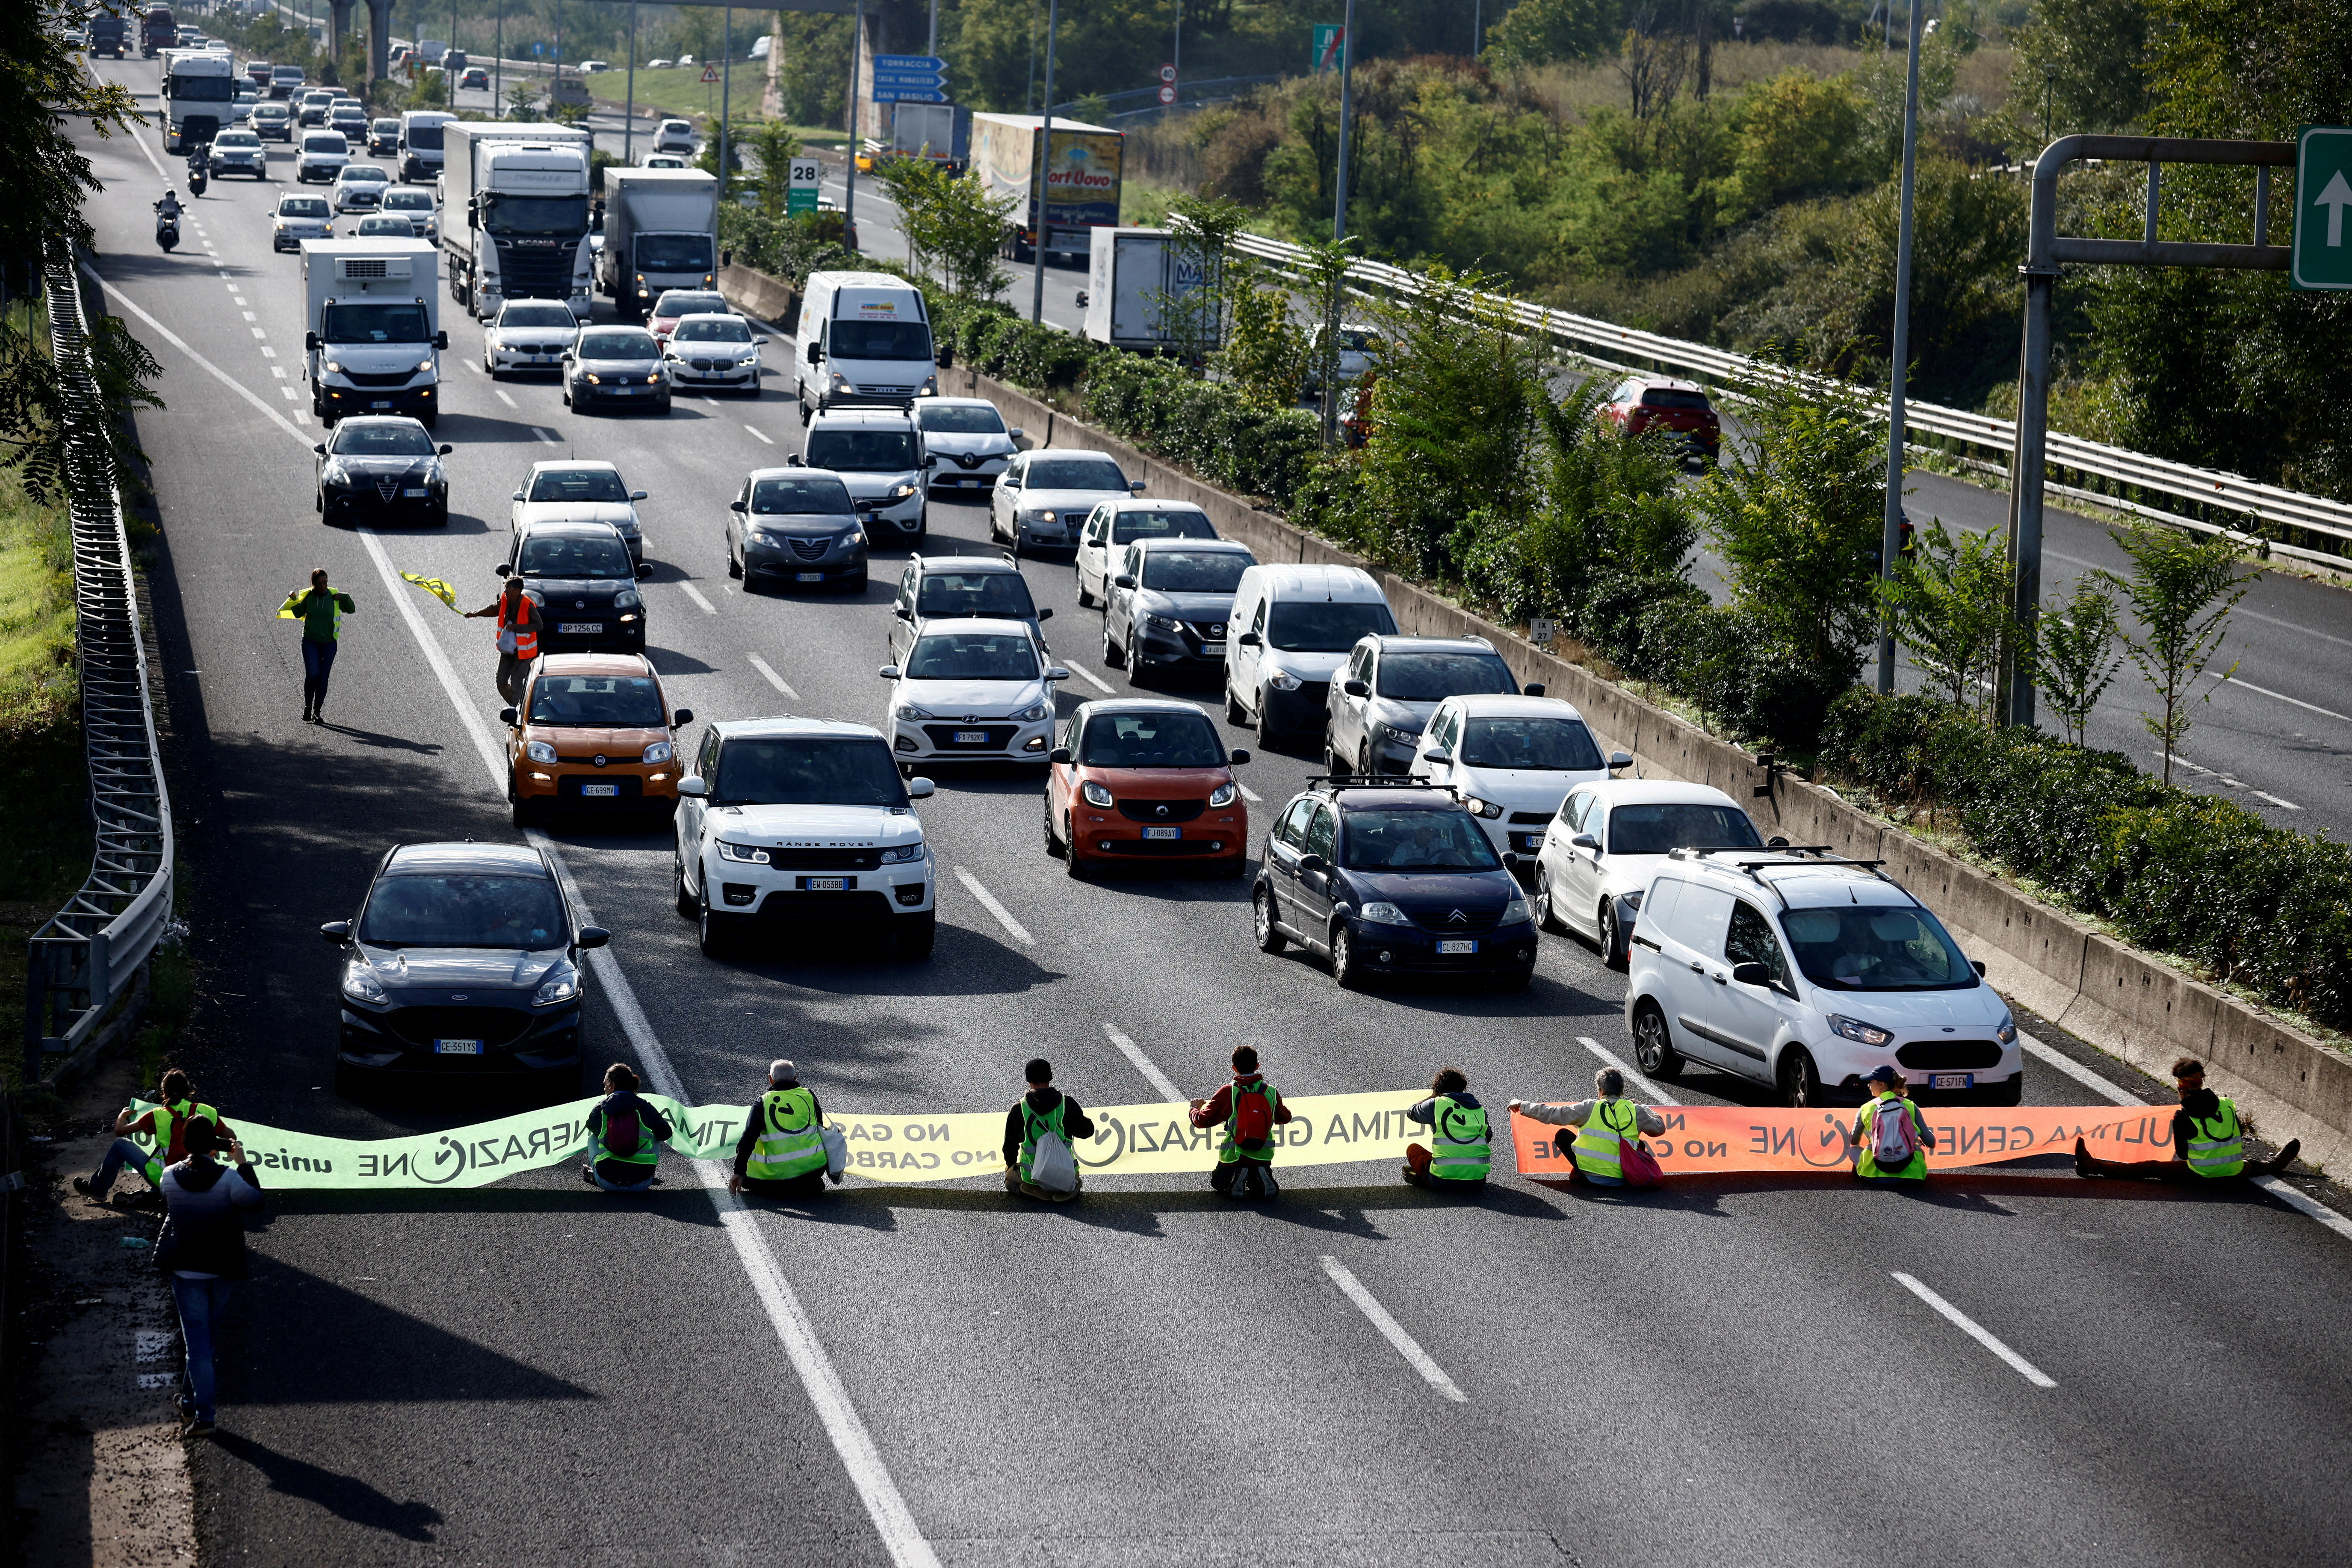 Climate activists block motorway in Rome